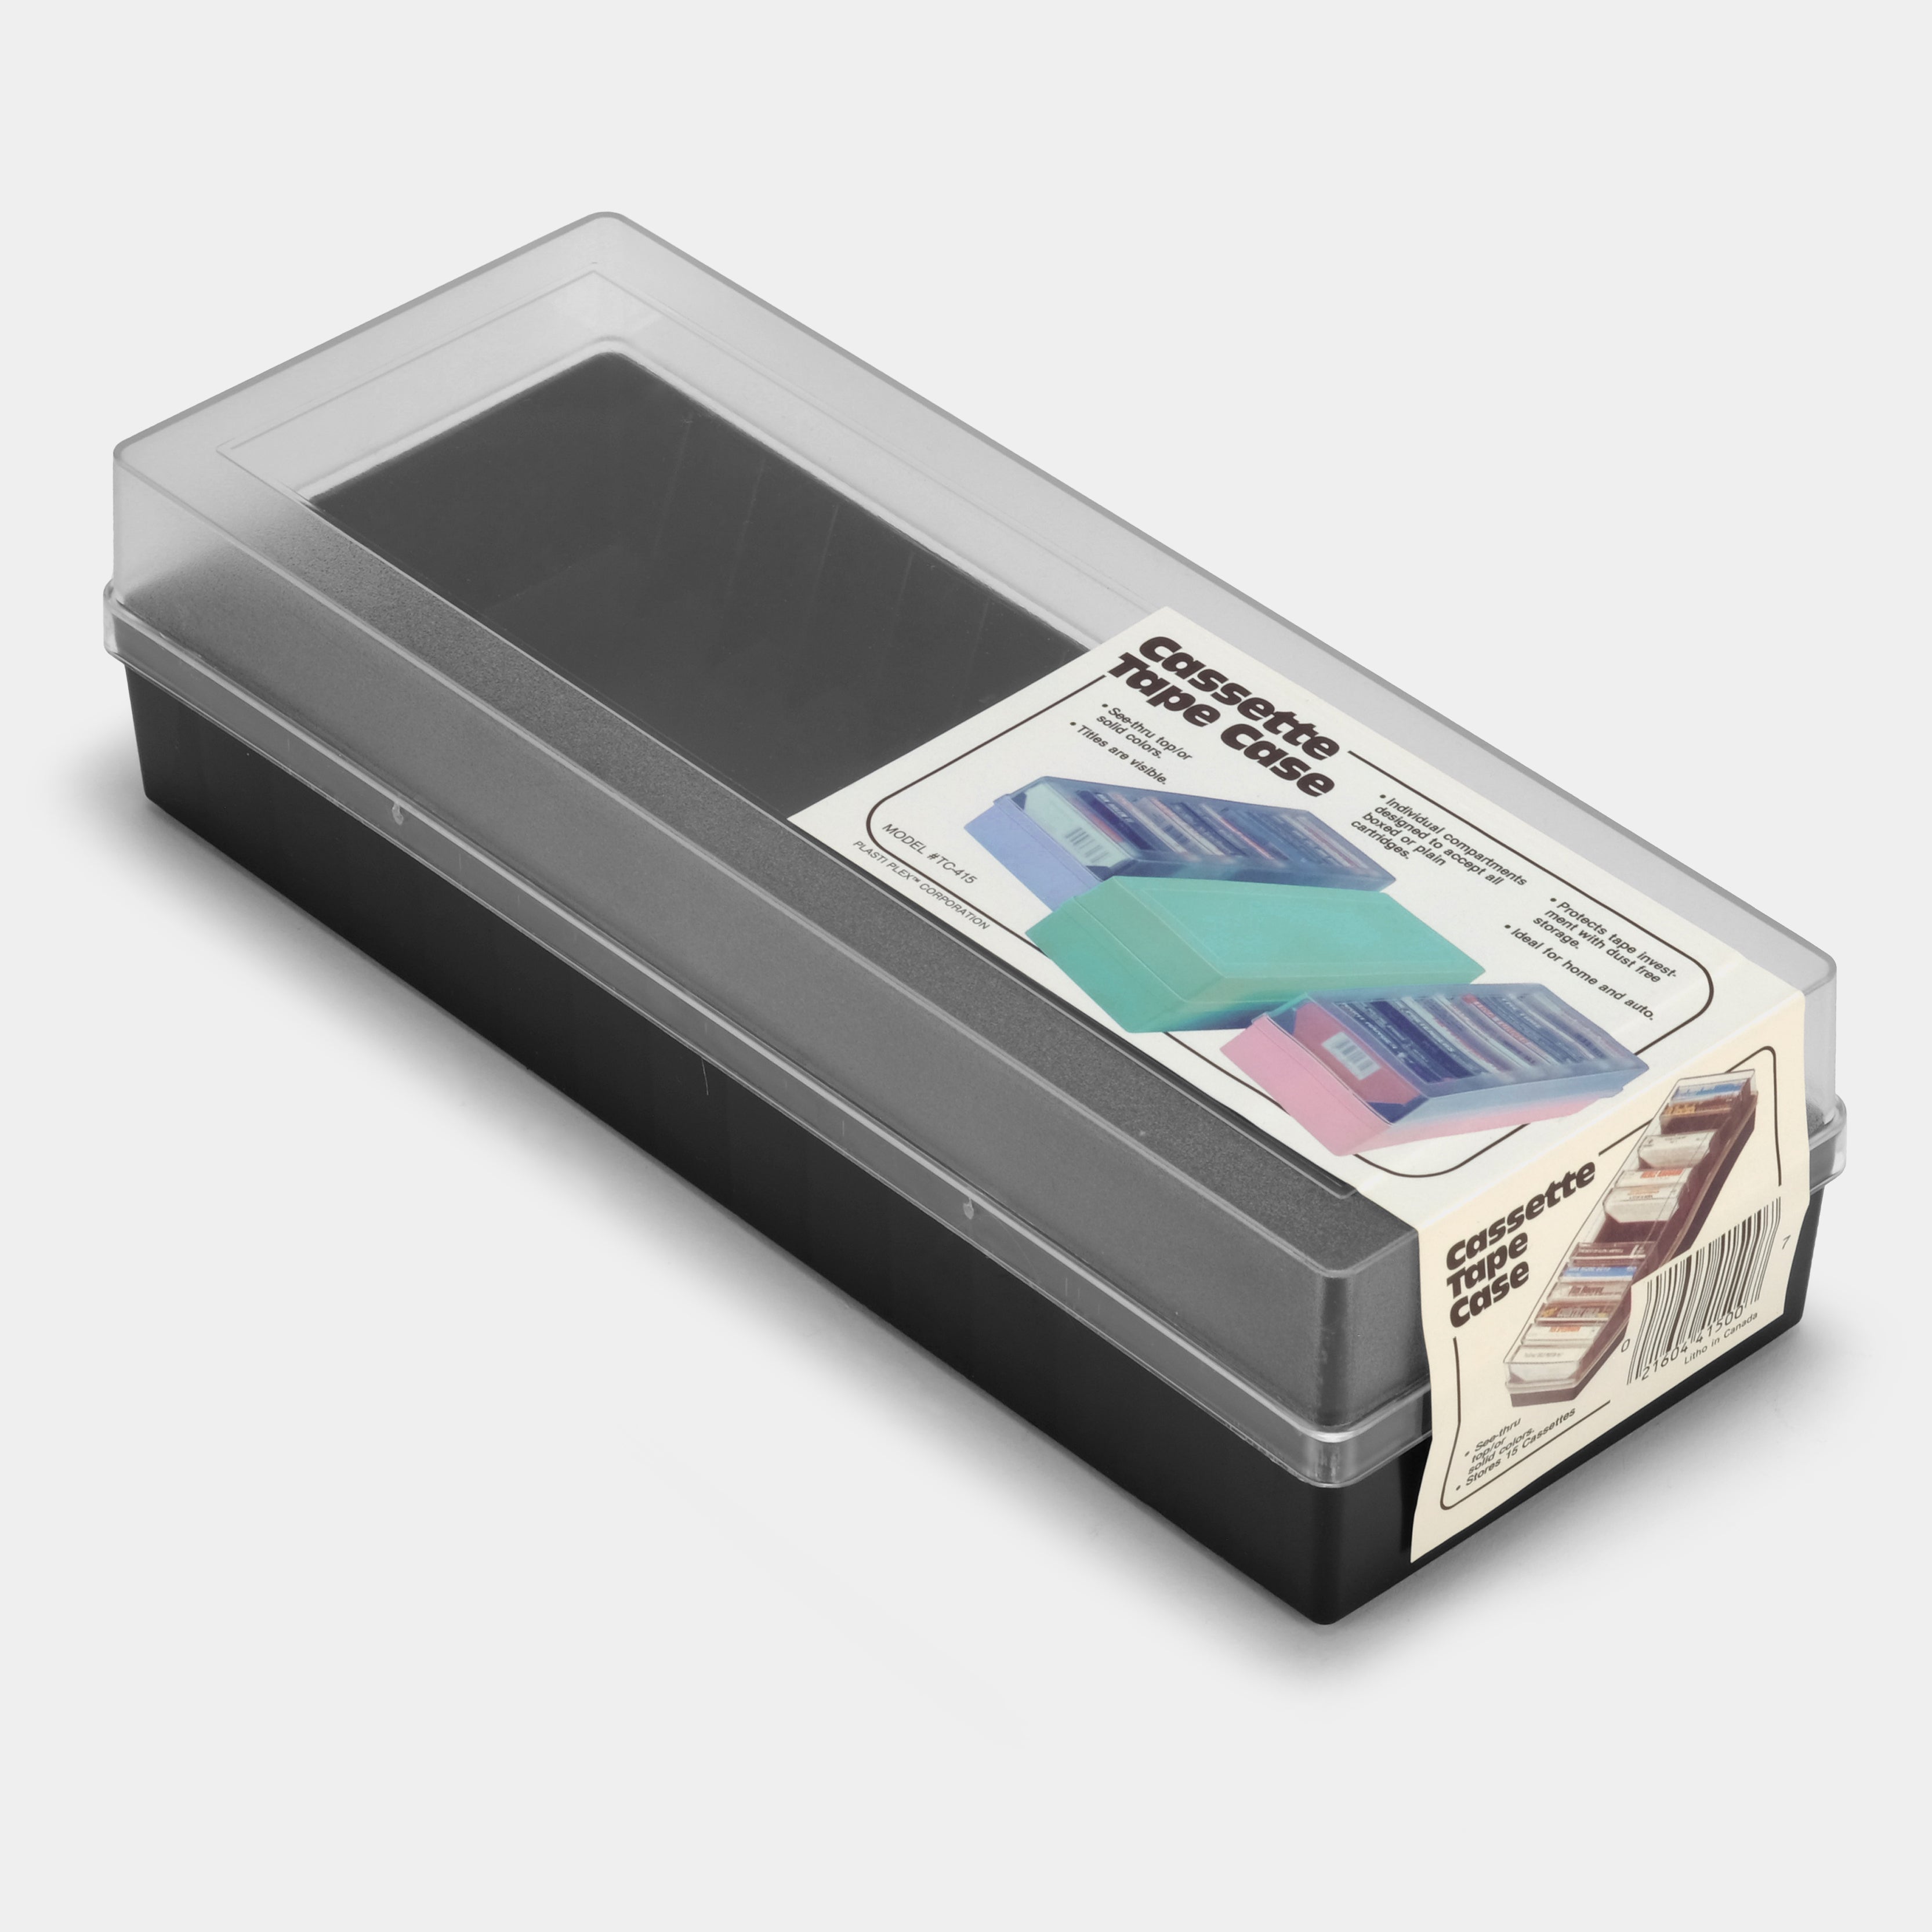 Plasti Plex Cassette Tape Case